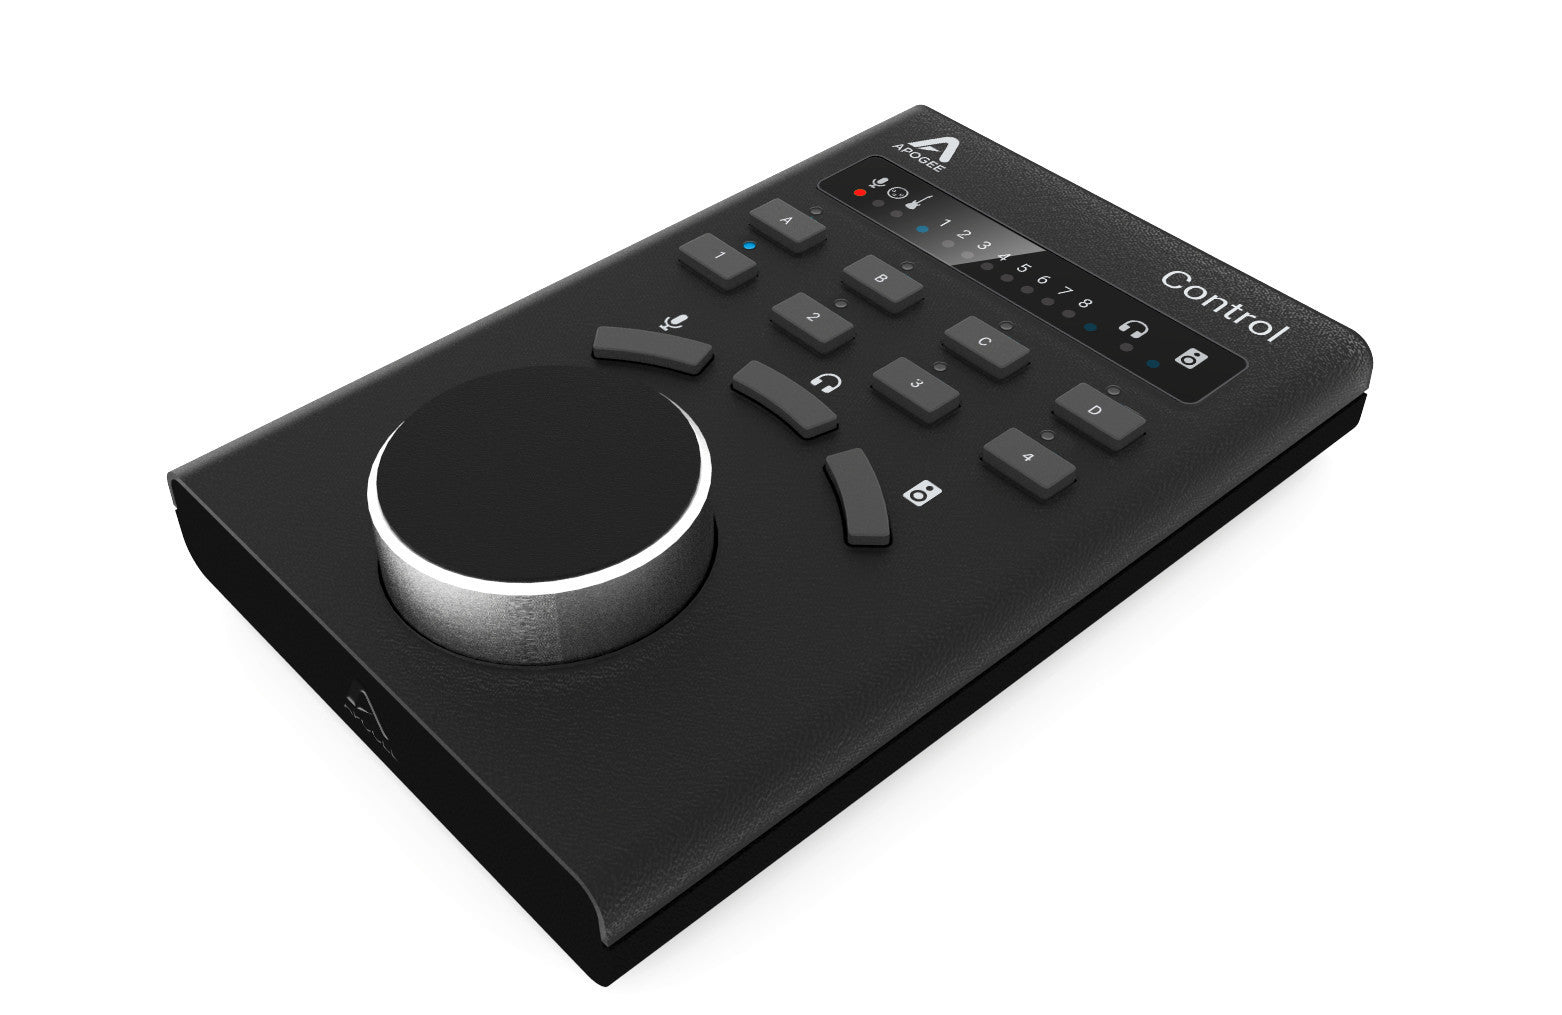 Apogee Control - Hardware Remote control via USB cable